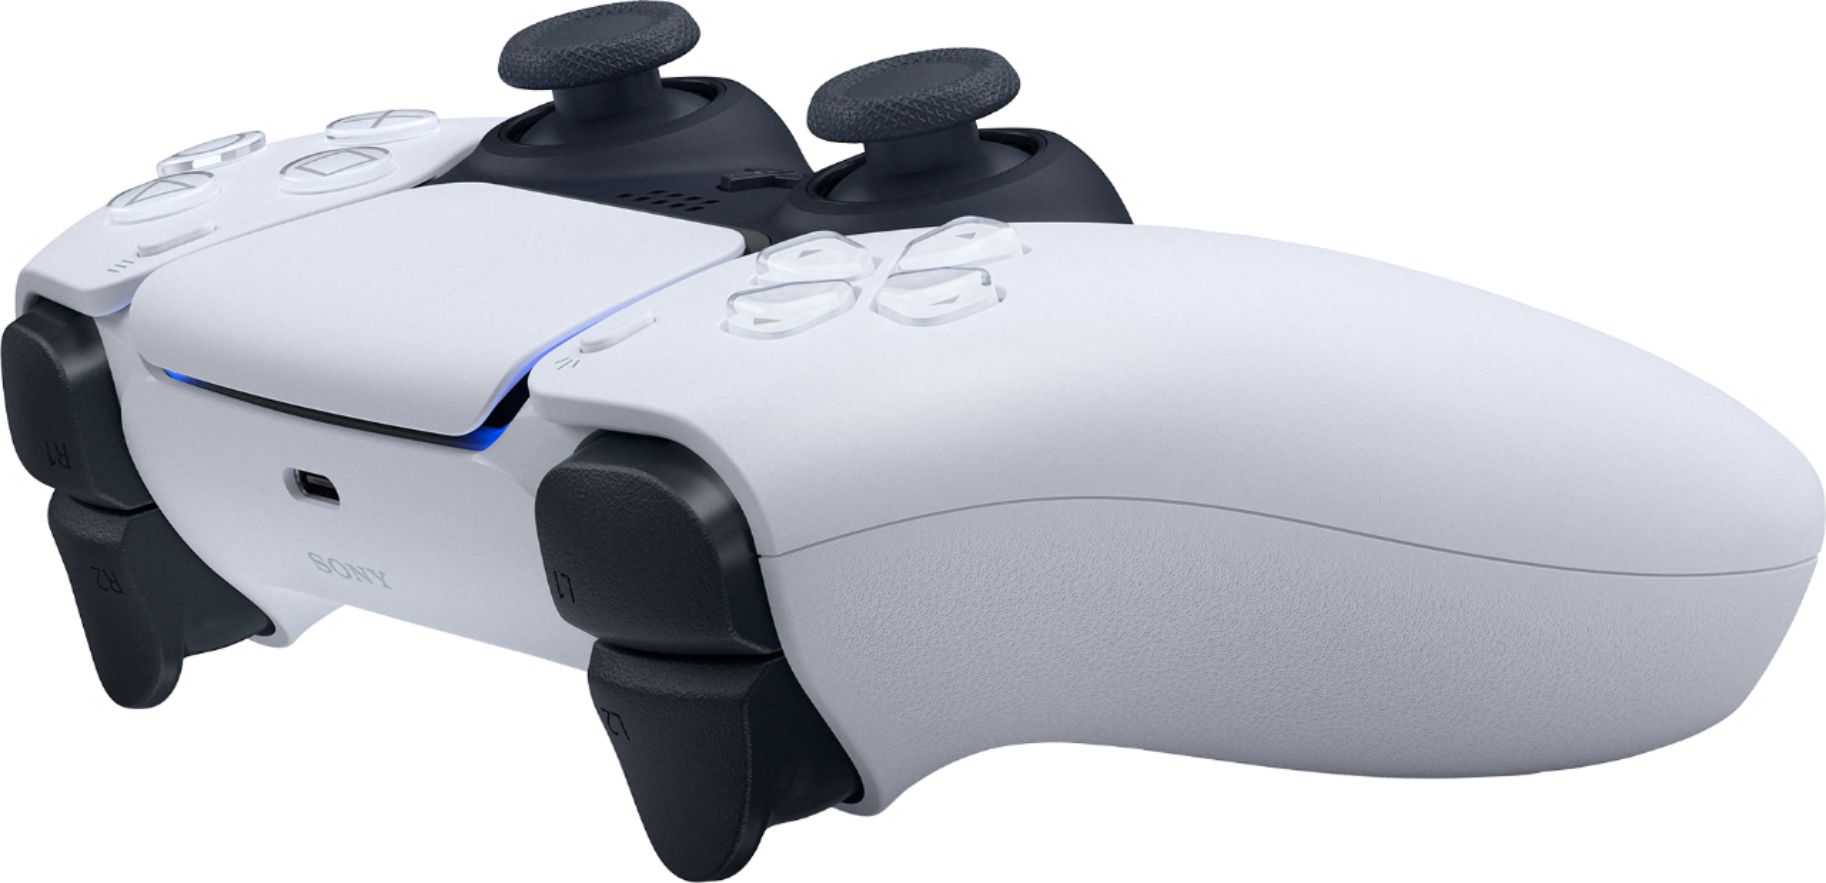 Sony PlayStation 5 DualSense Wireless Controller White 3005715 